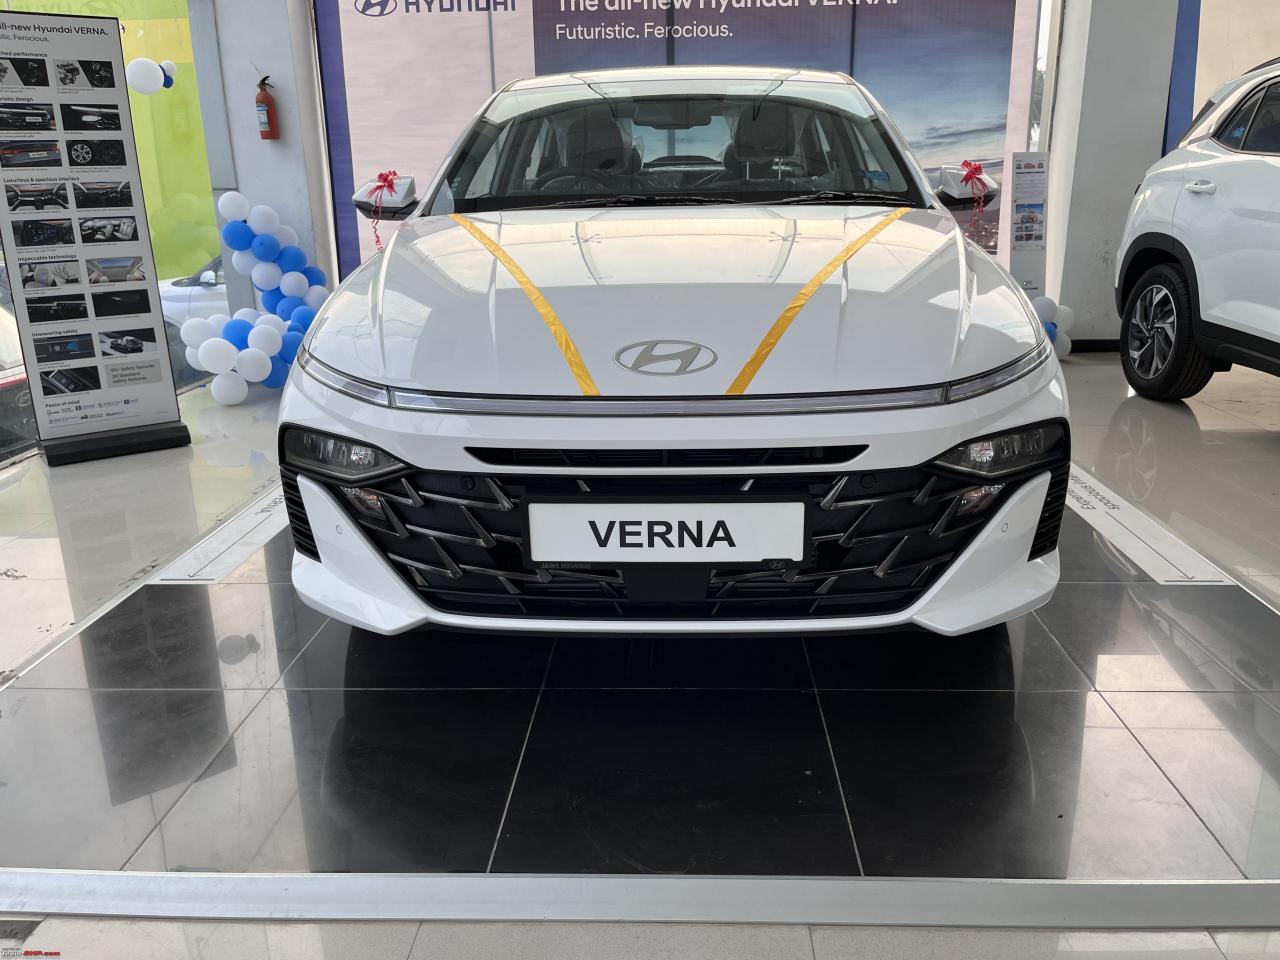 2020 Hyundai Verna launched in China along with Hyundai ix25 » MotorOctane